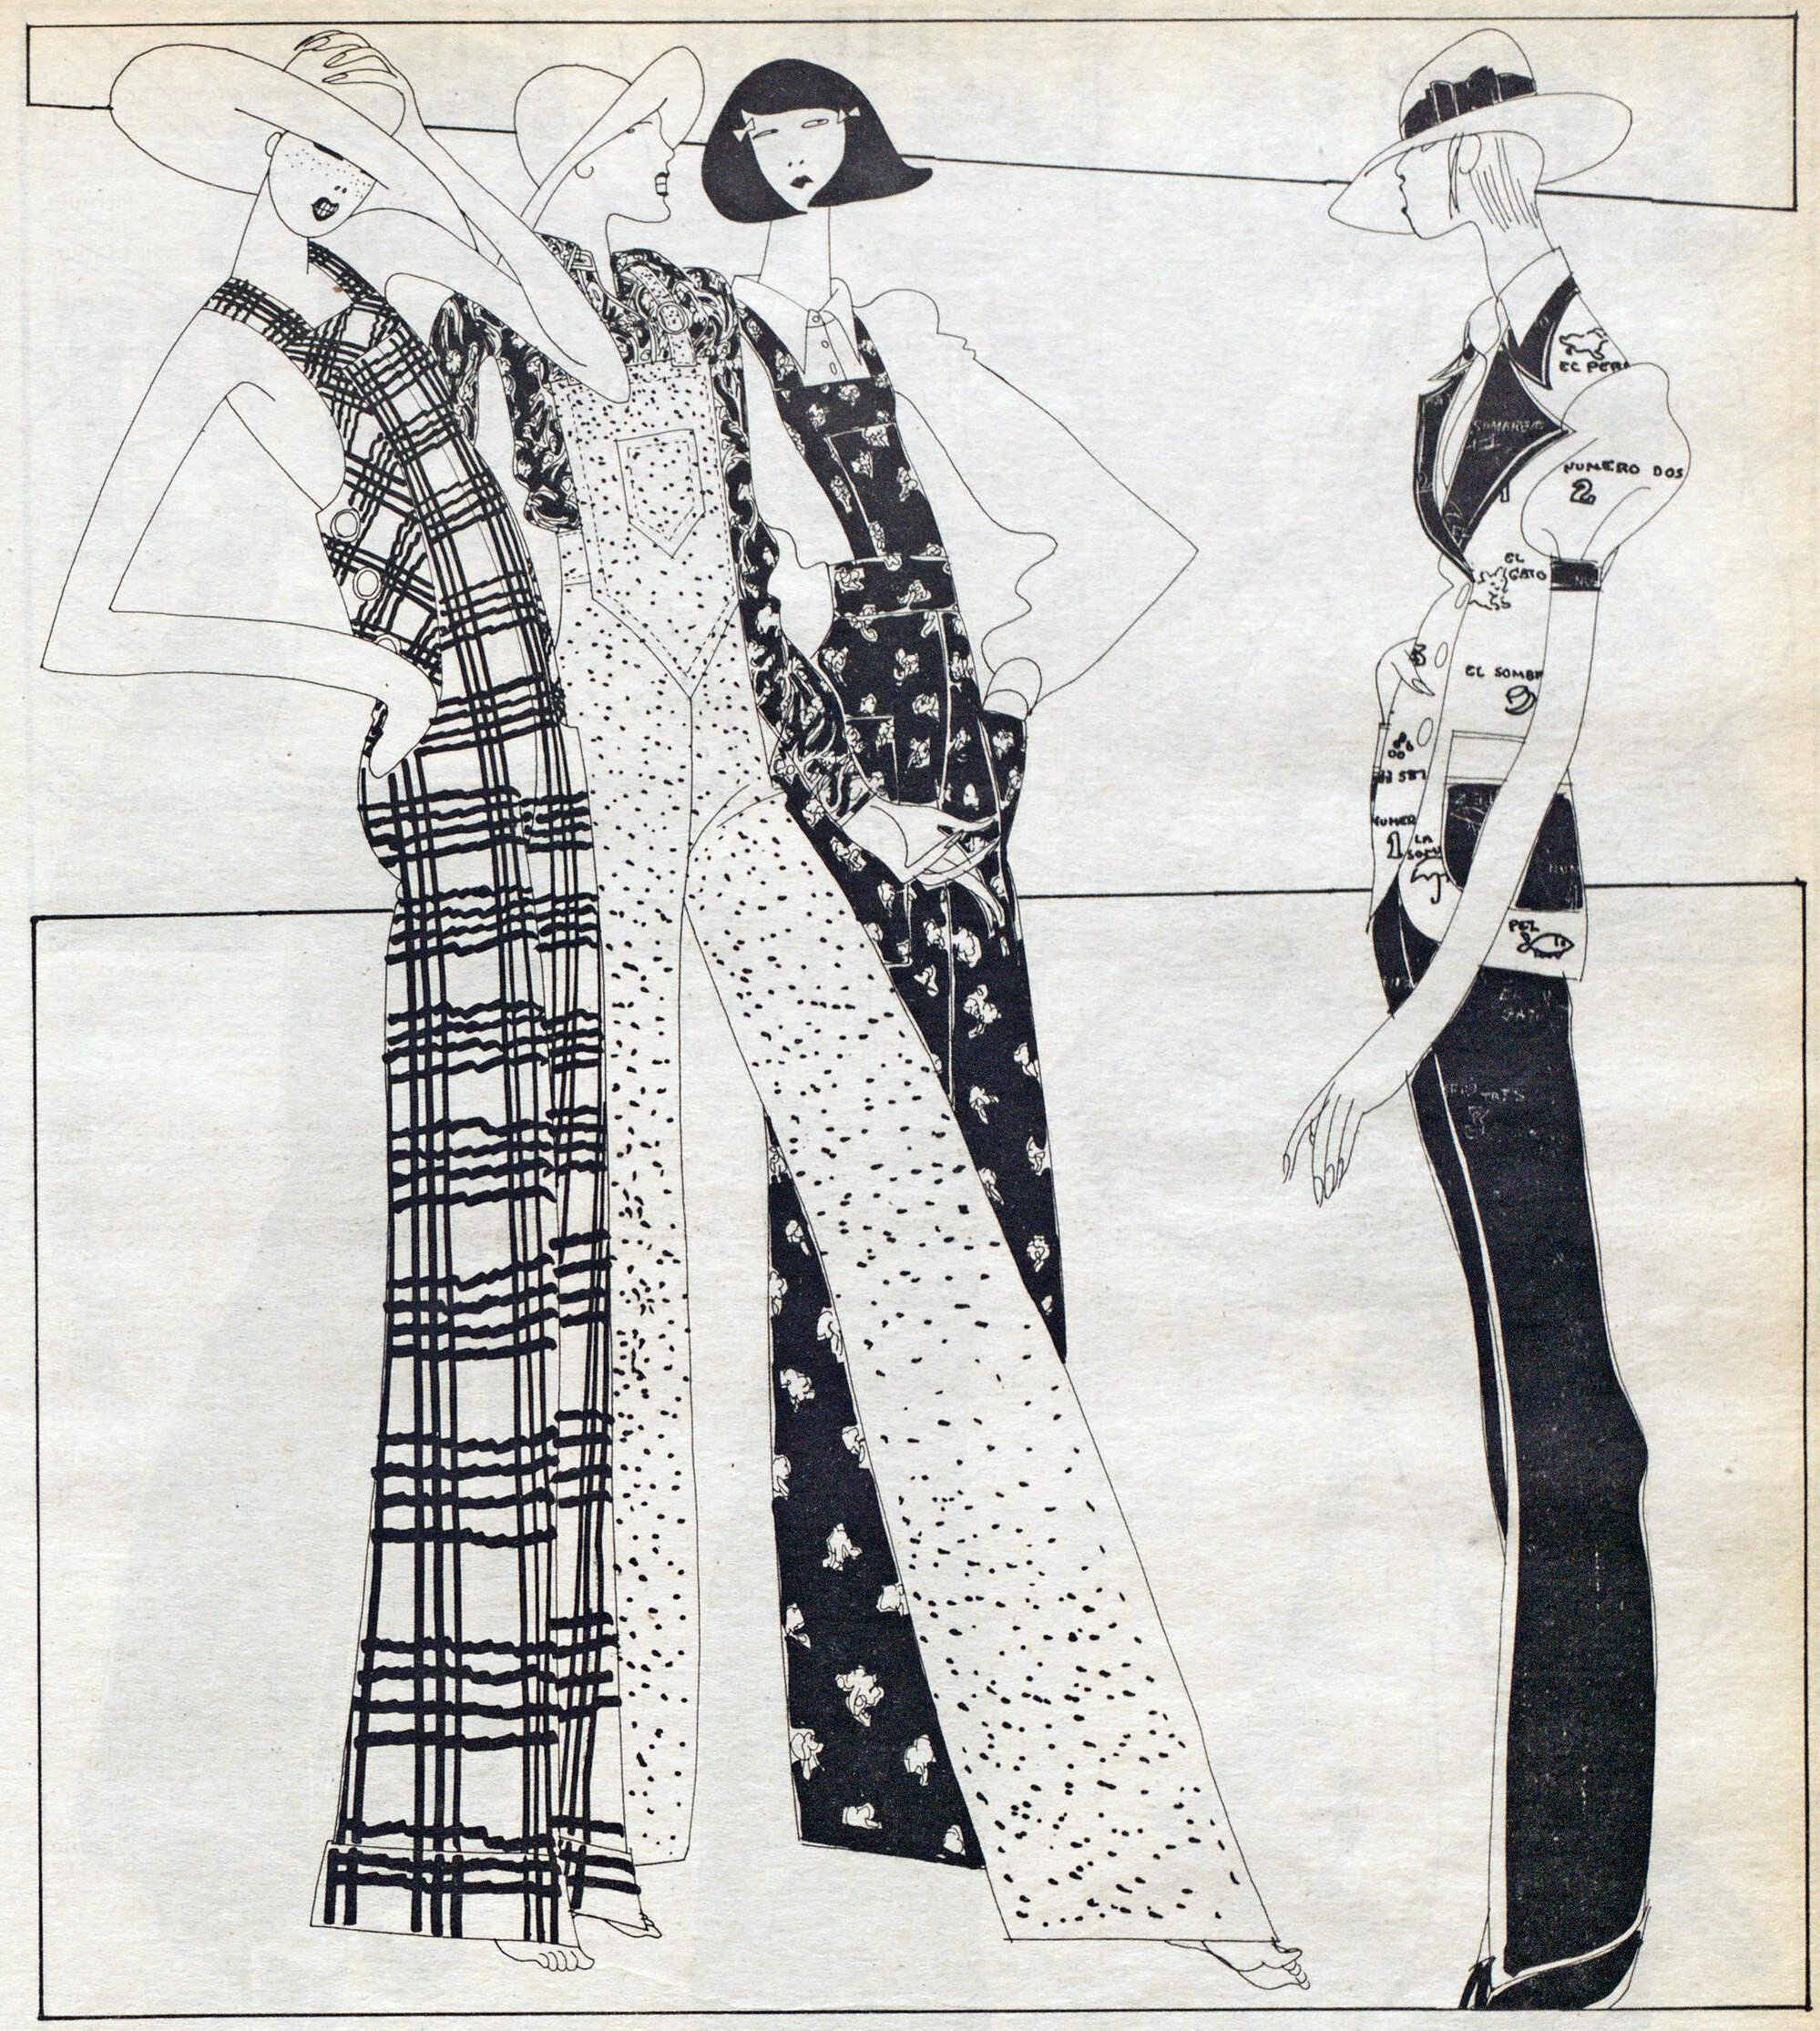 Left, Tere Tereba for Tootique. Women’s Wear Daily, April 25, 1973.